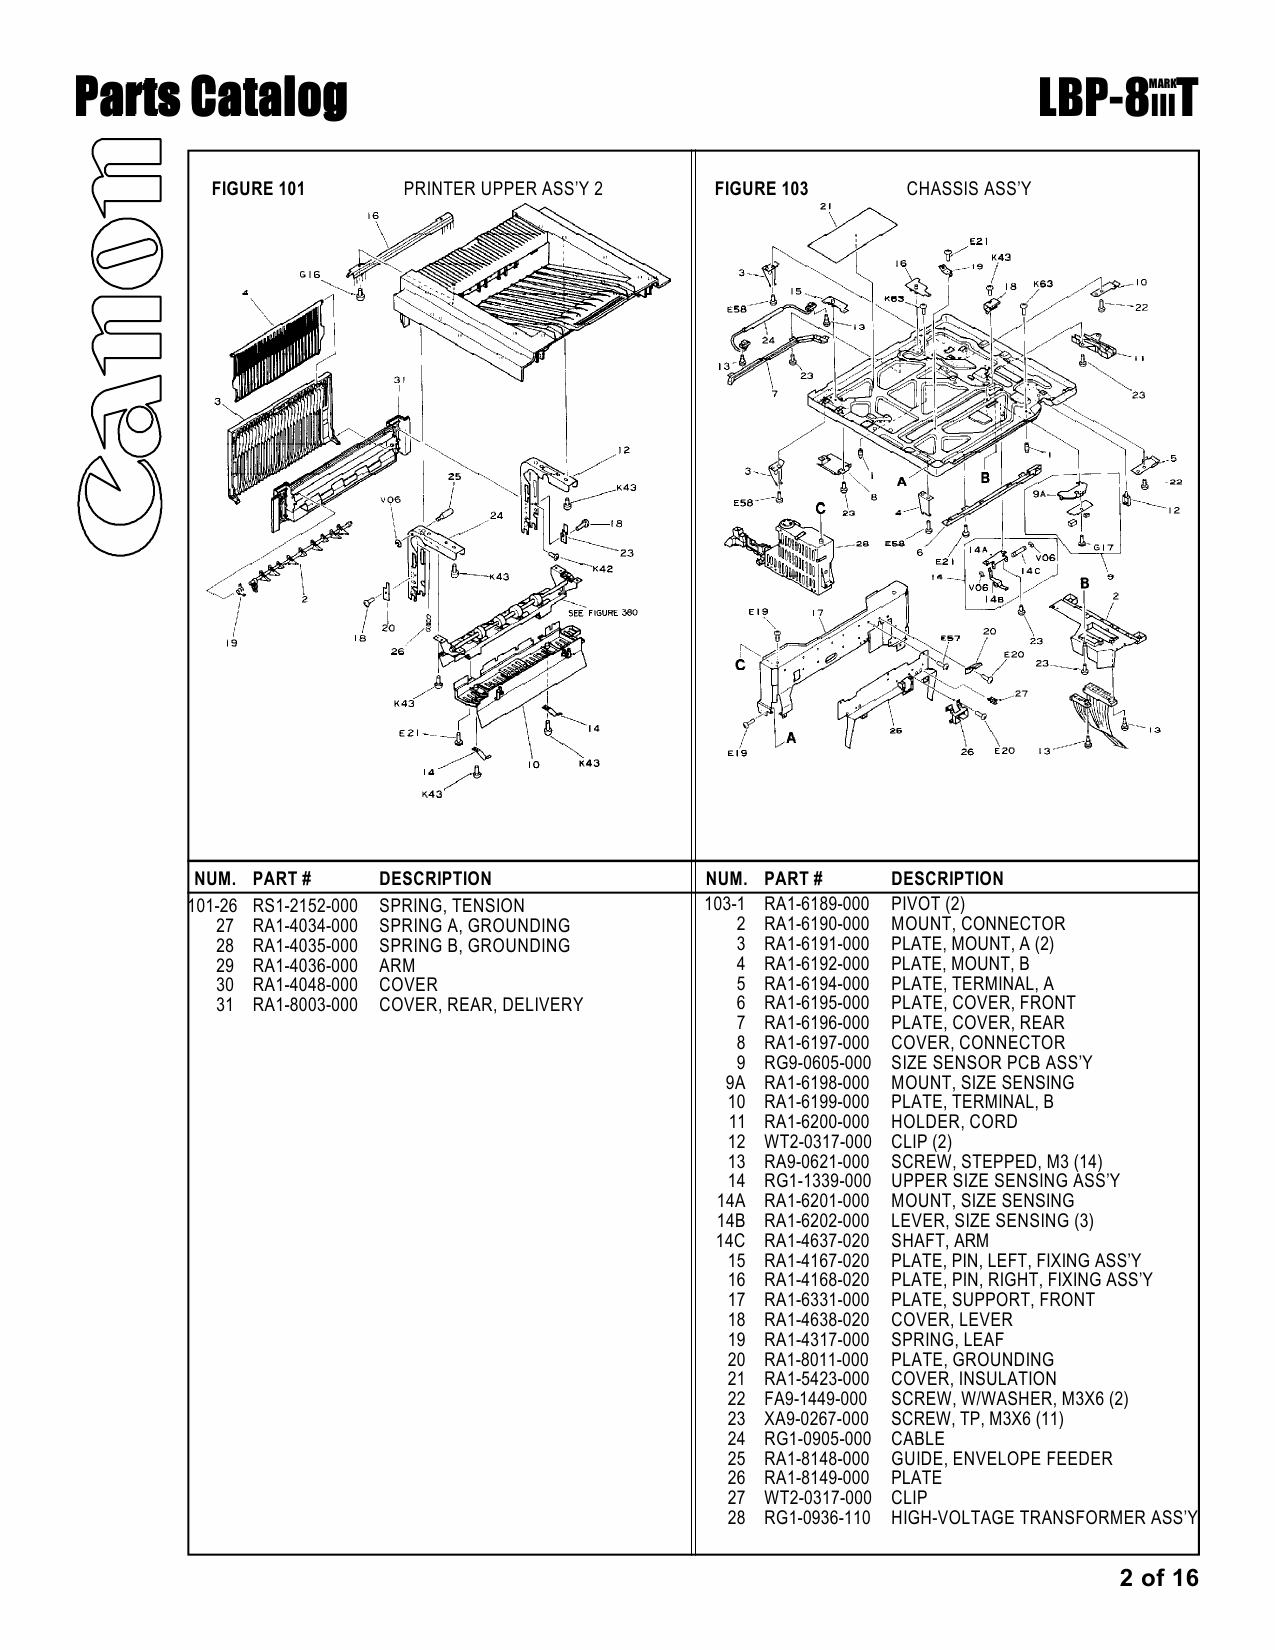 Canon imageCLASS LBP-8IIIT Parts Catalog Manual-2